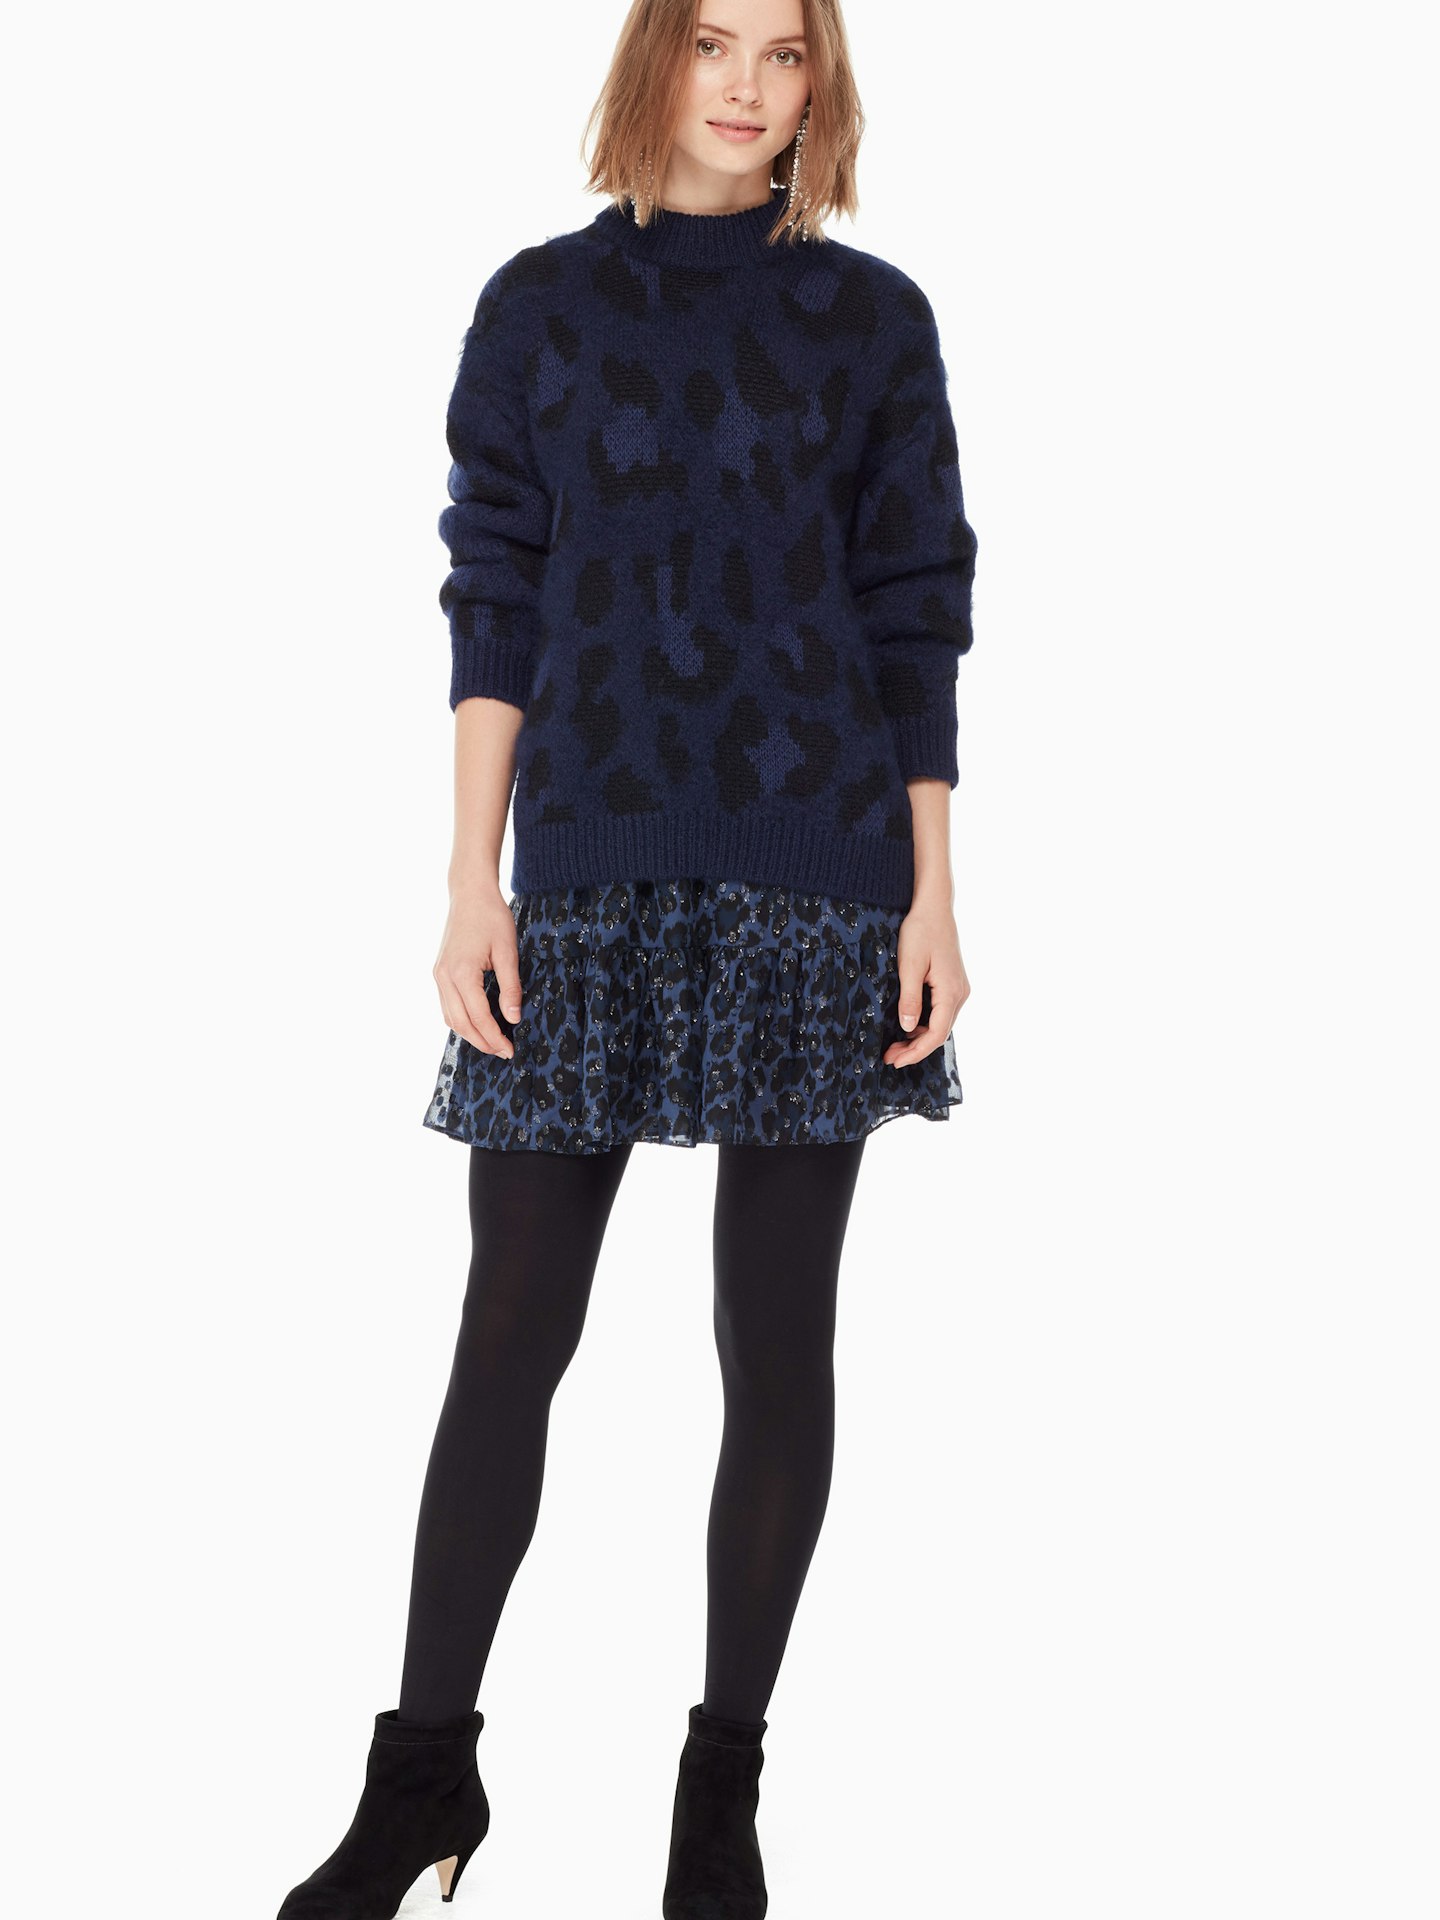 Kate Spade, Leopard-Print Sweater, £250